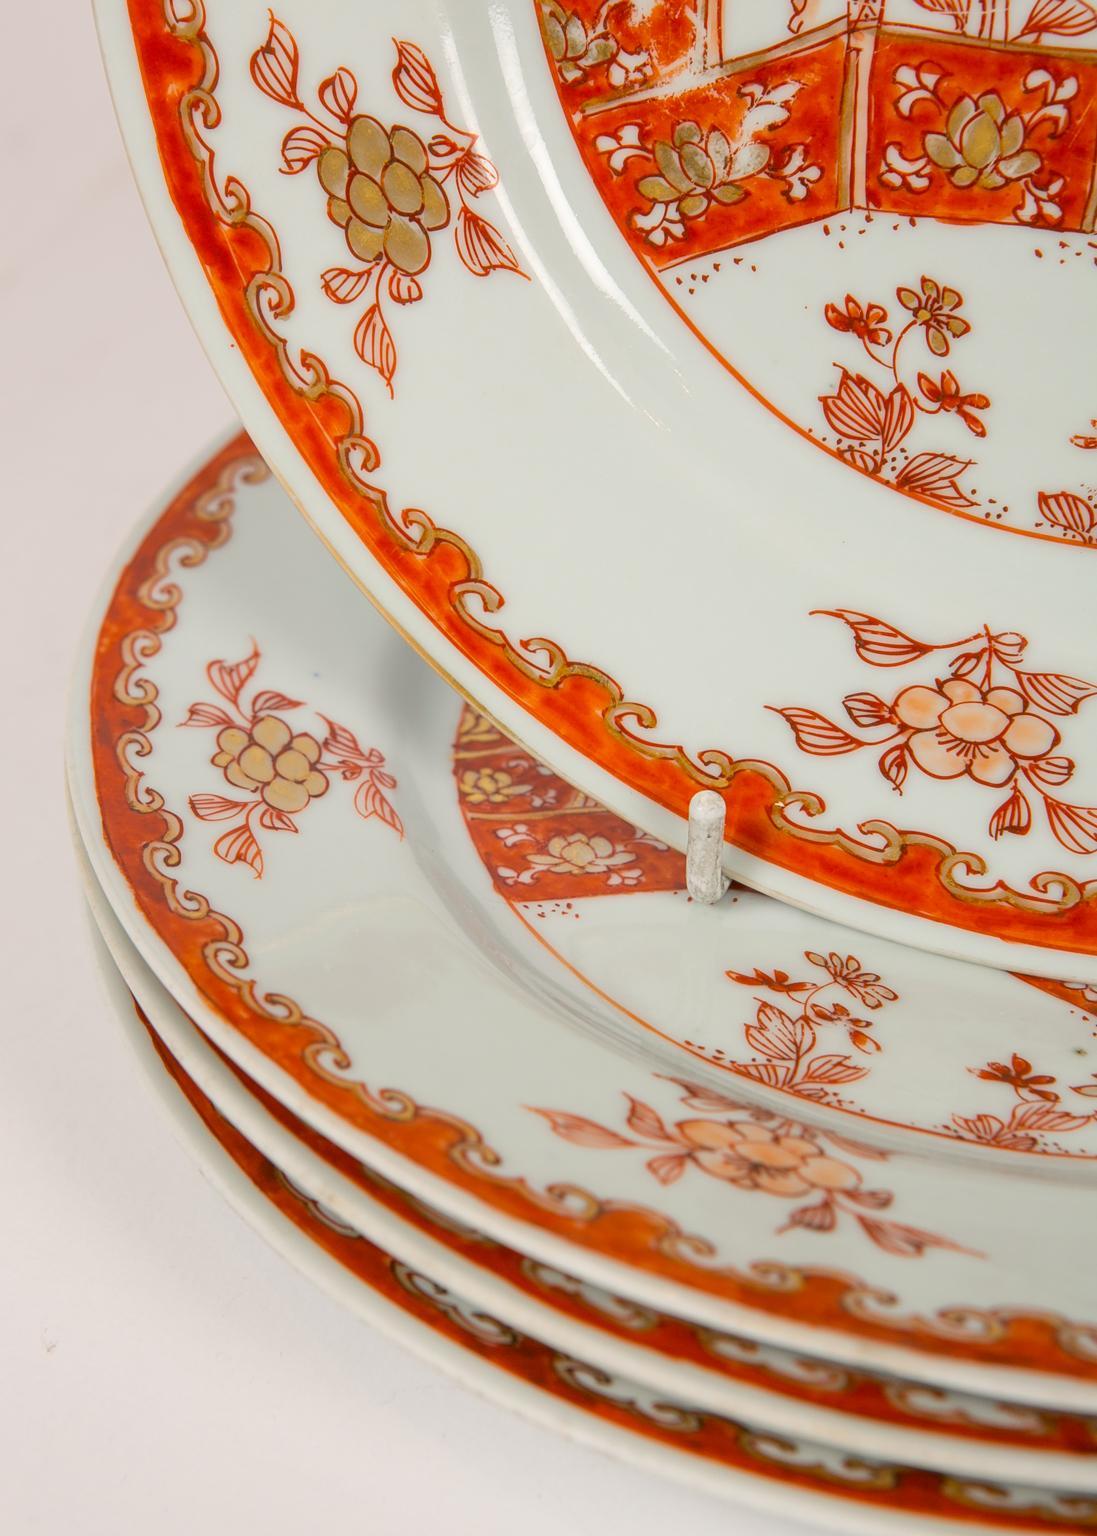 Antique Chinese Porcelain Rouge de Fer Dessert Plates Early 18th Century ca 1710 3